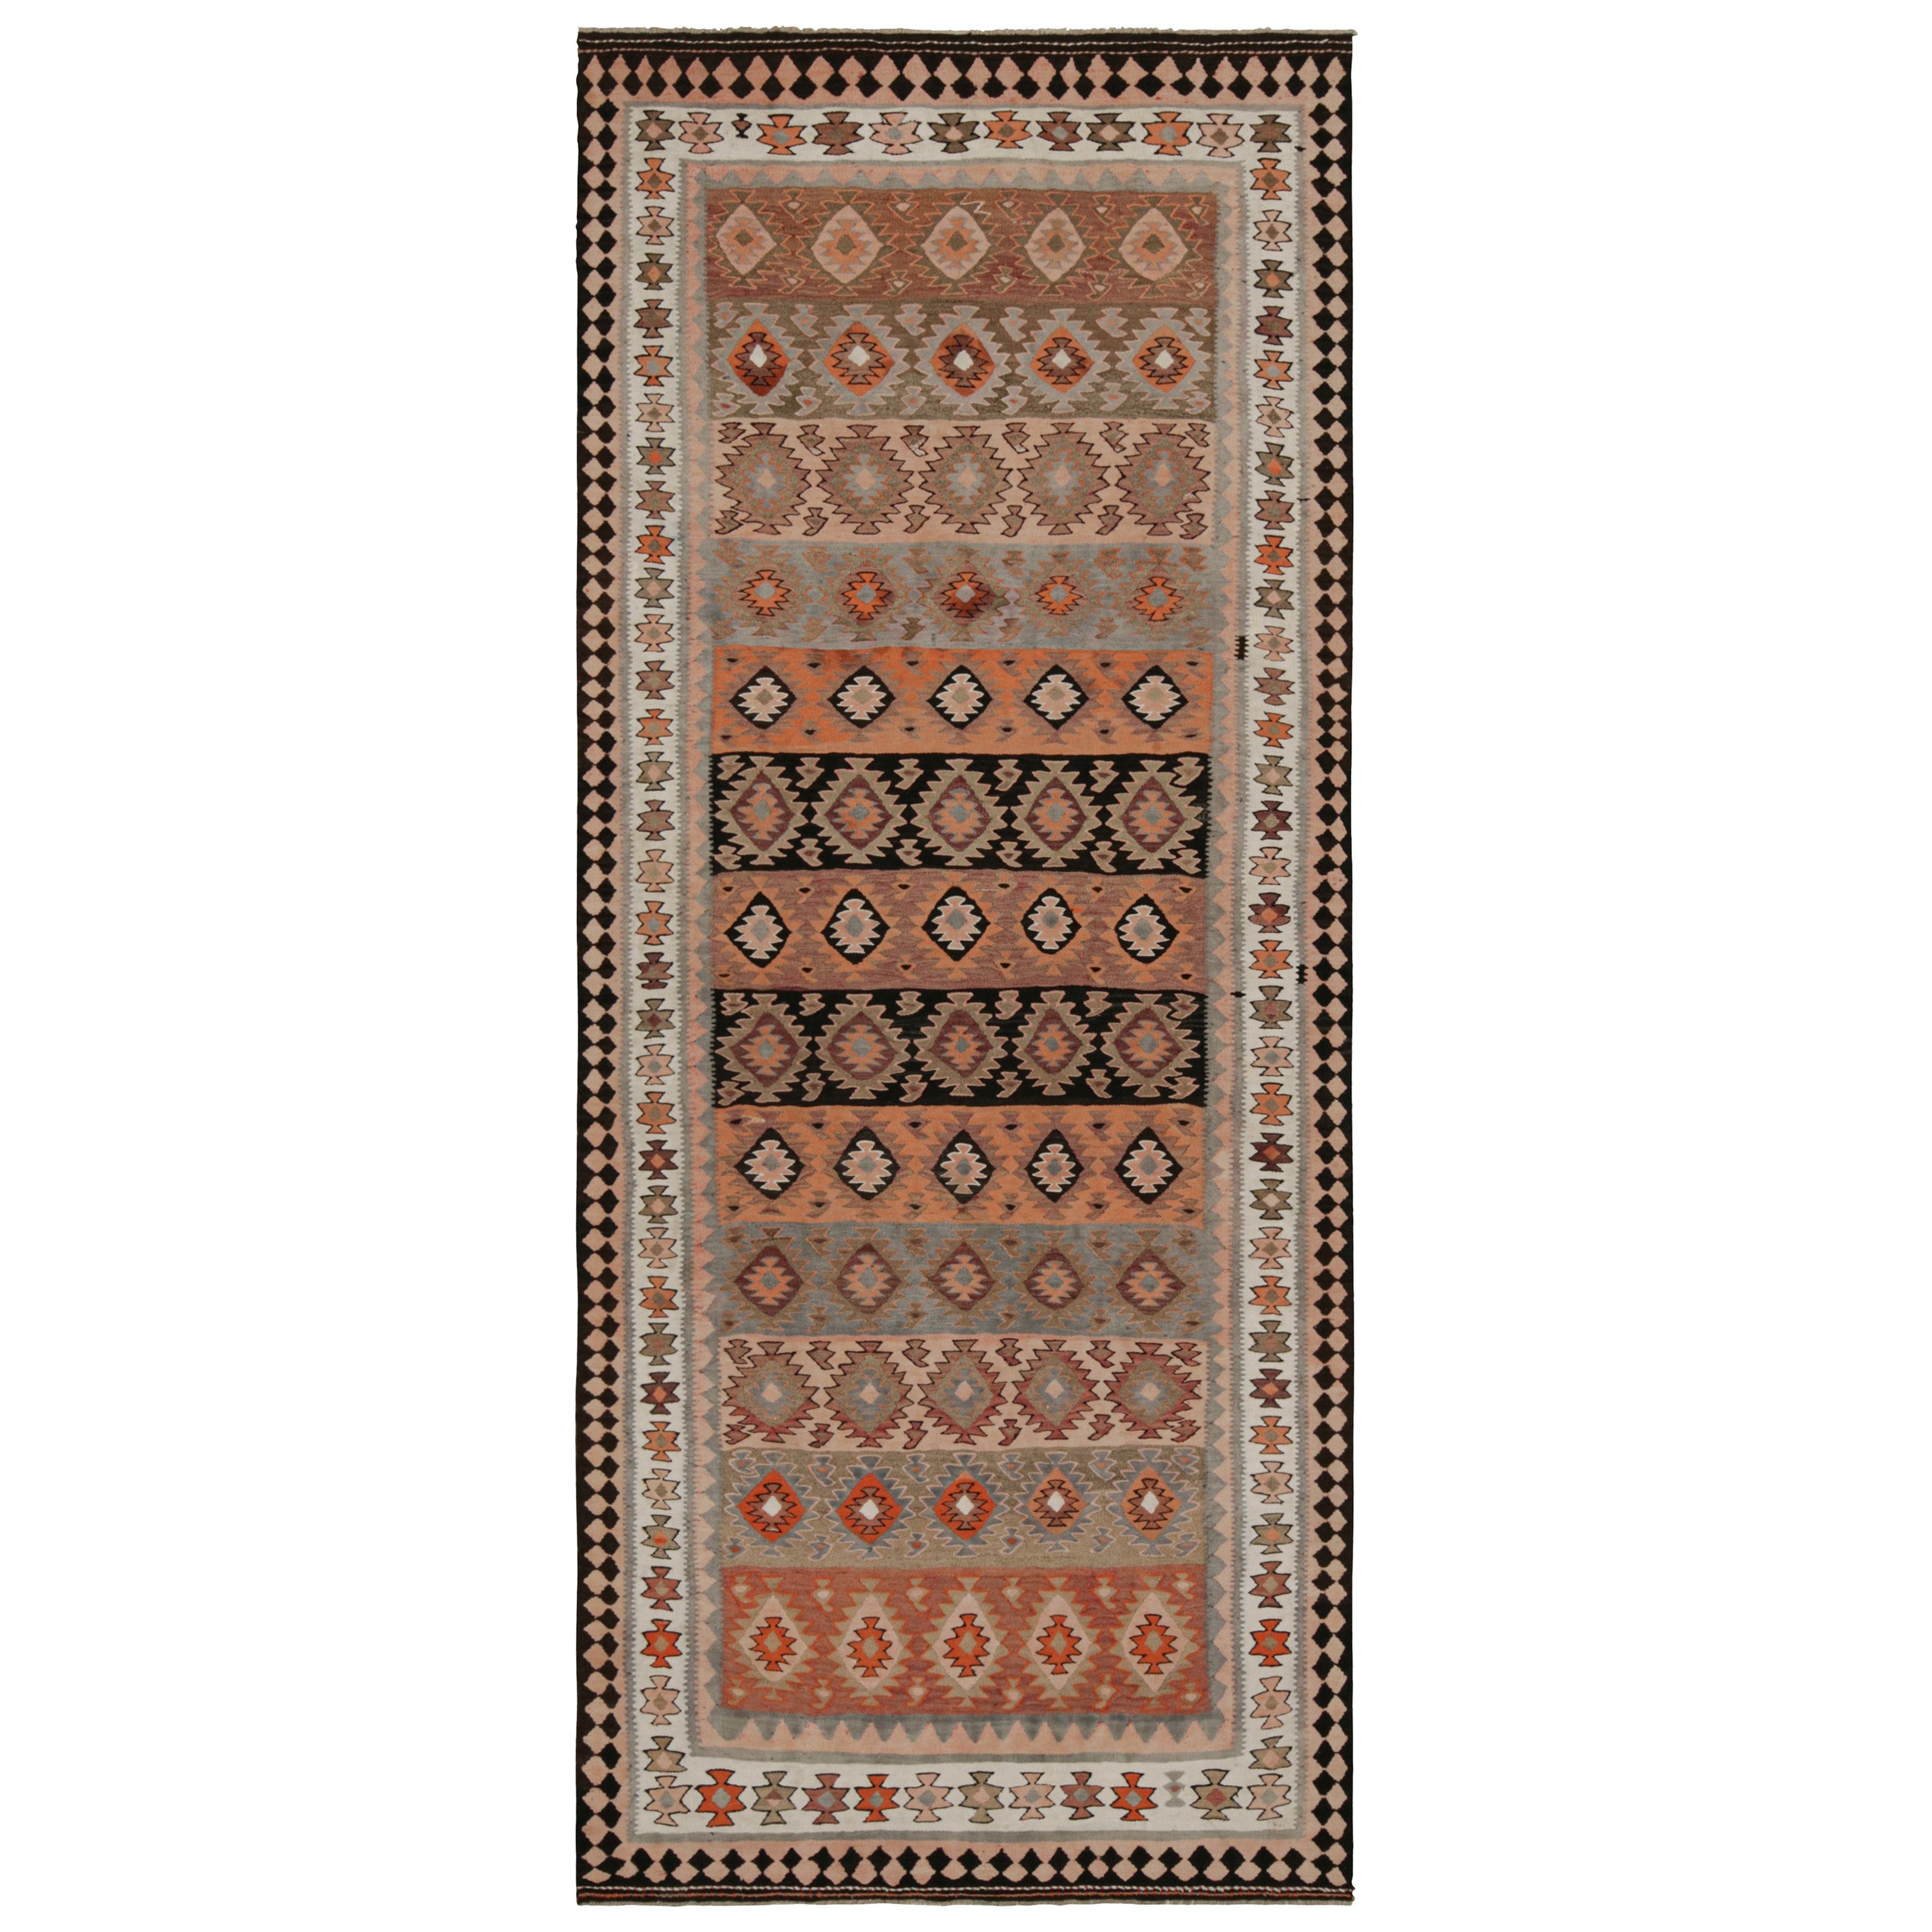 Kilim tribal afghan vintage à motifs polychromes par Rug & Kilim